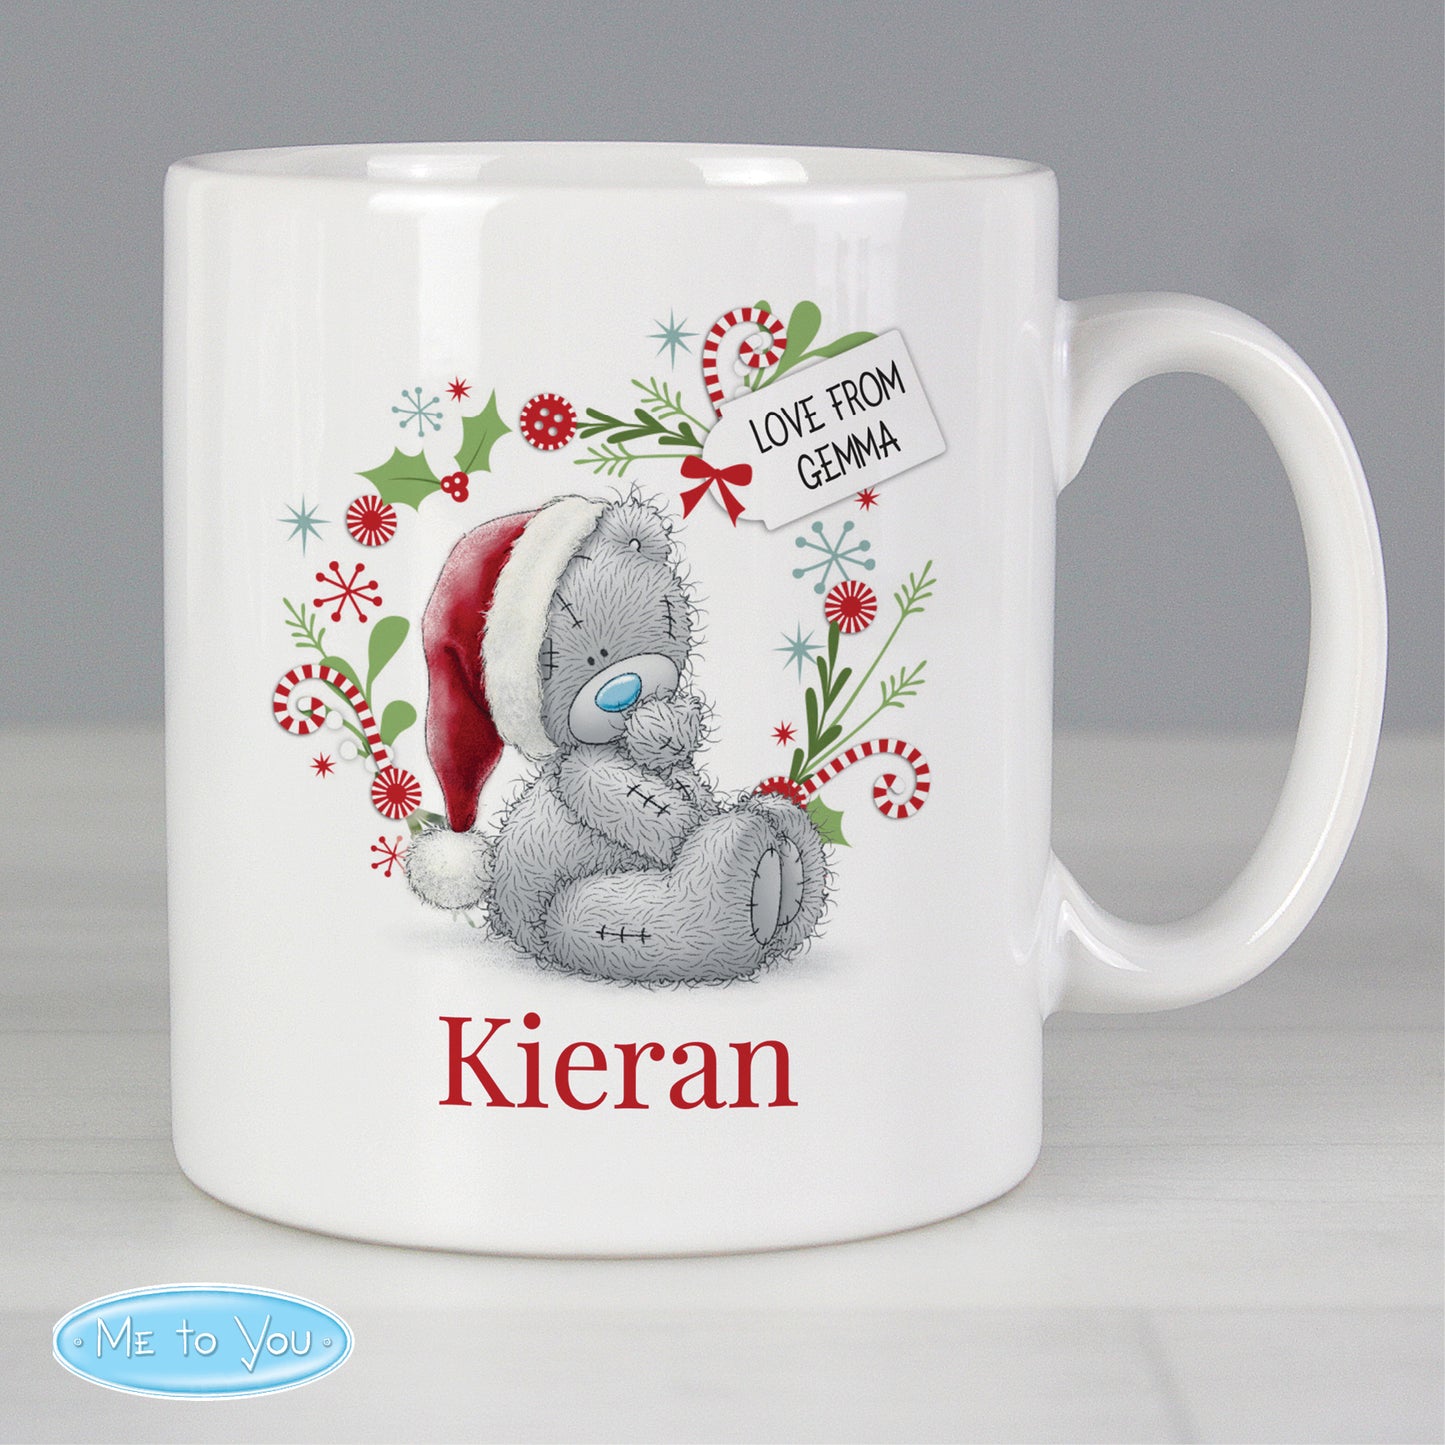 Personalised Me to You Christmas Mug - Personalise It!